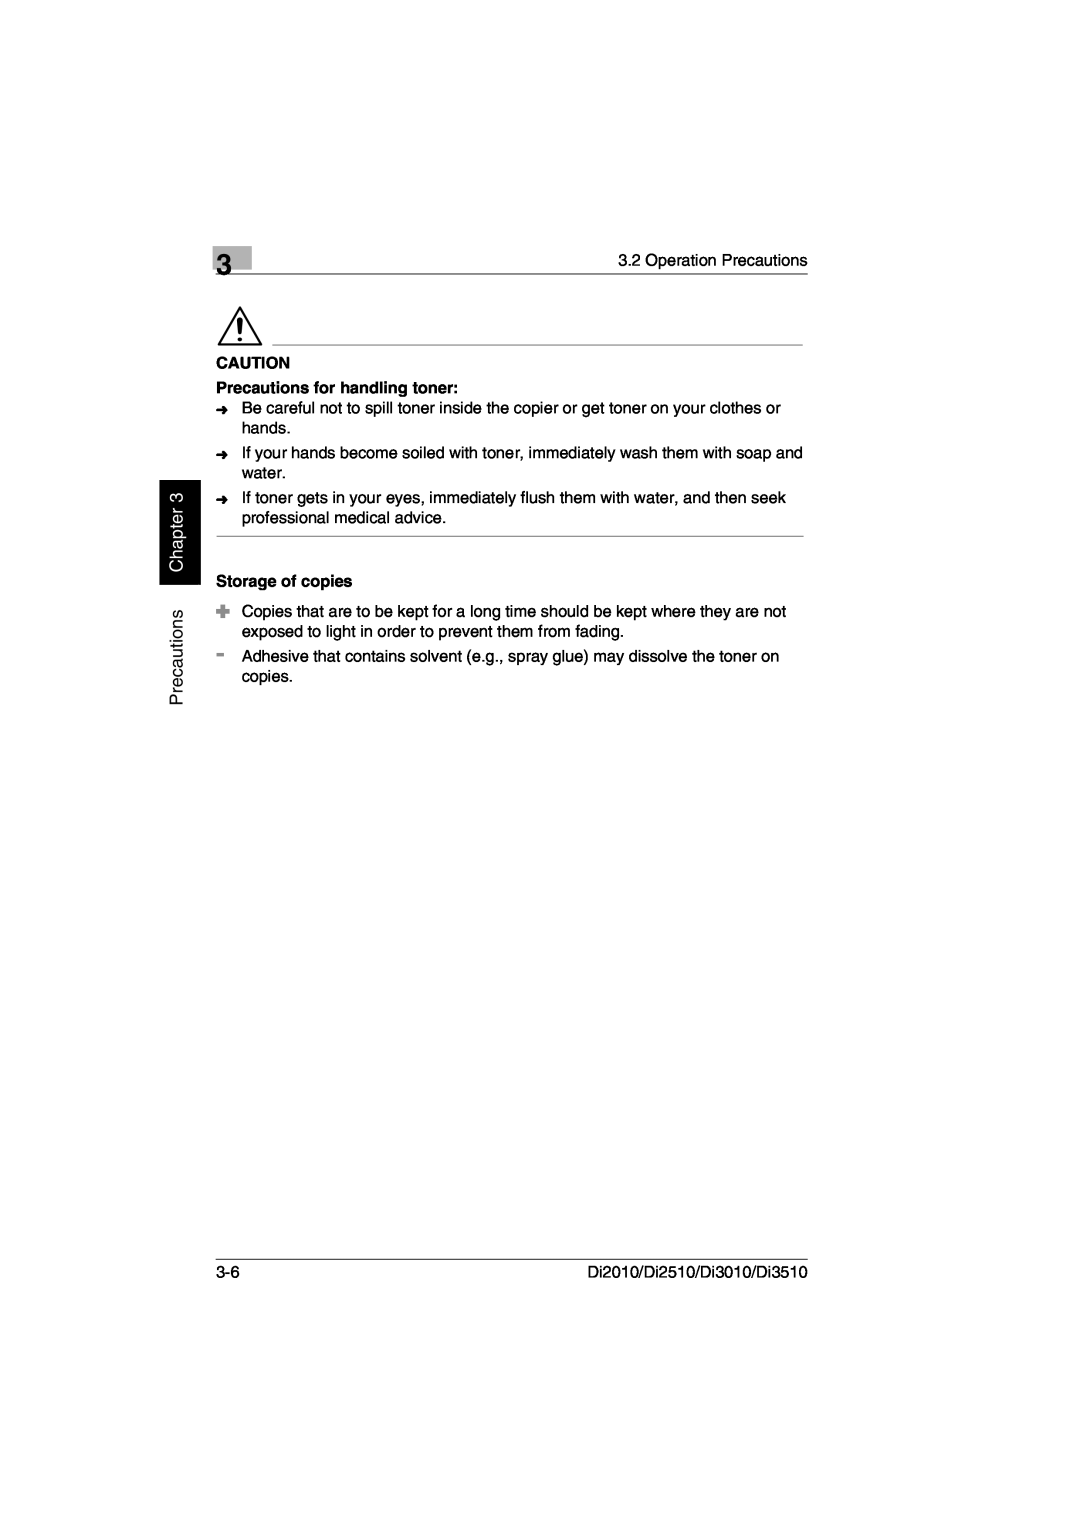 Minolta Di3510, DI2510, DI2010, DI3010 user manual Precautions Chapter, Precautions for handling toner, Storage of copies 